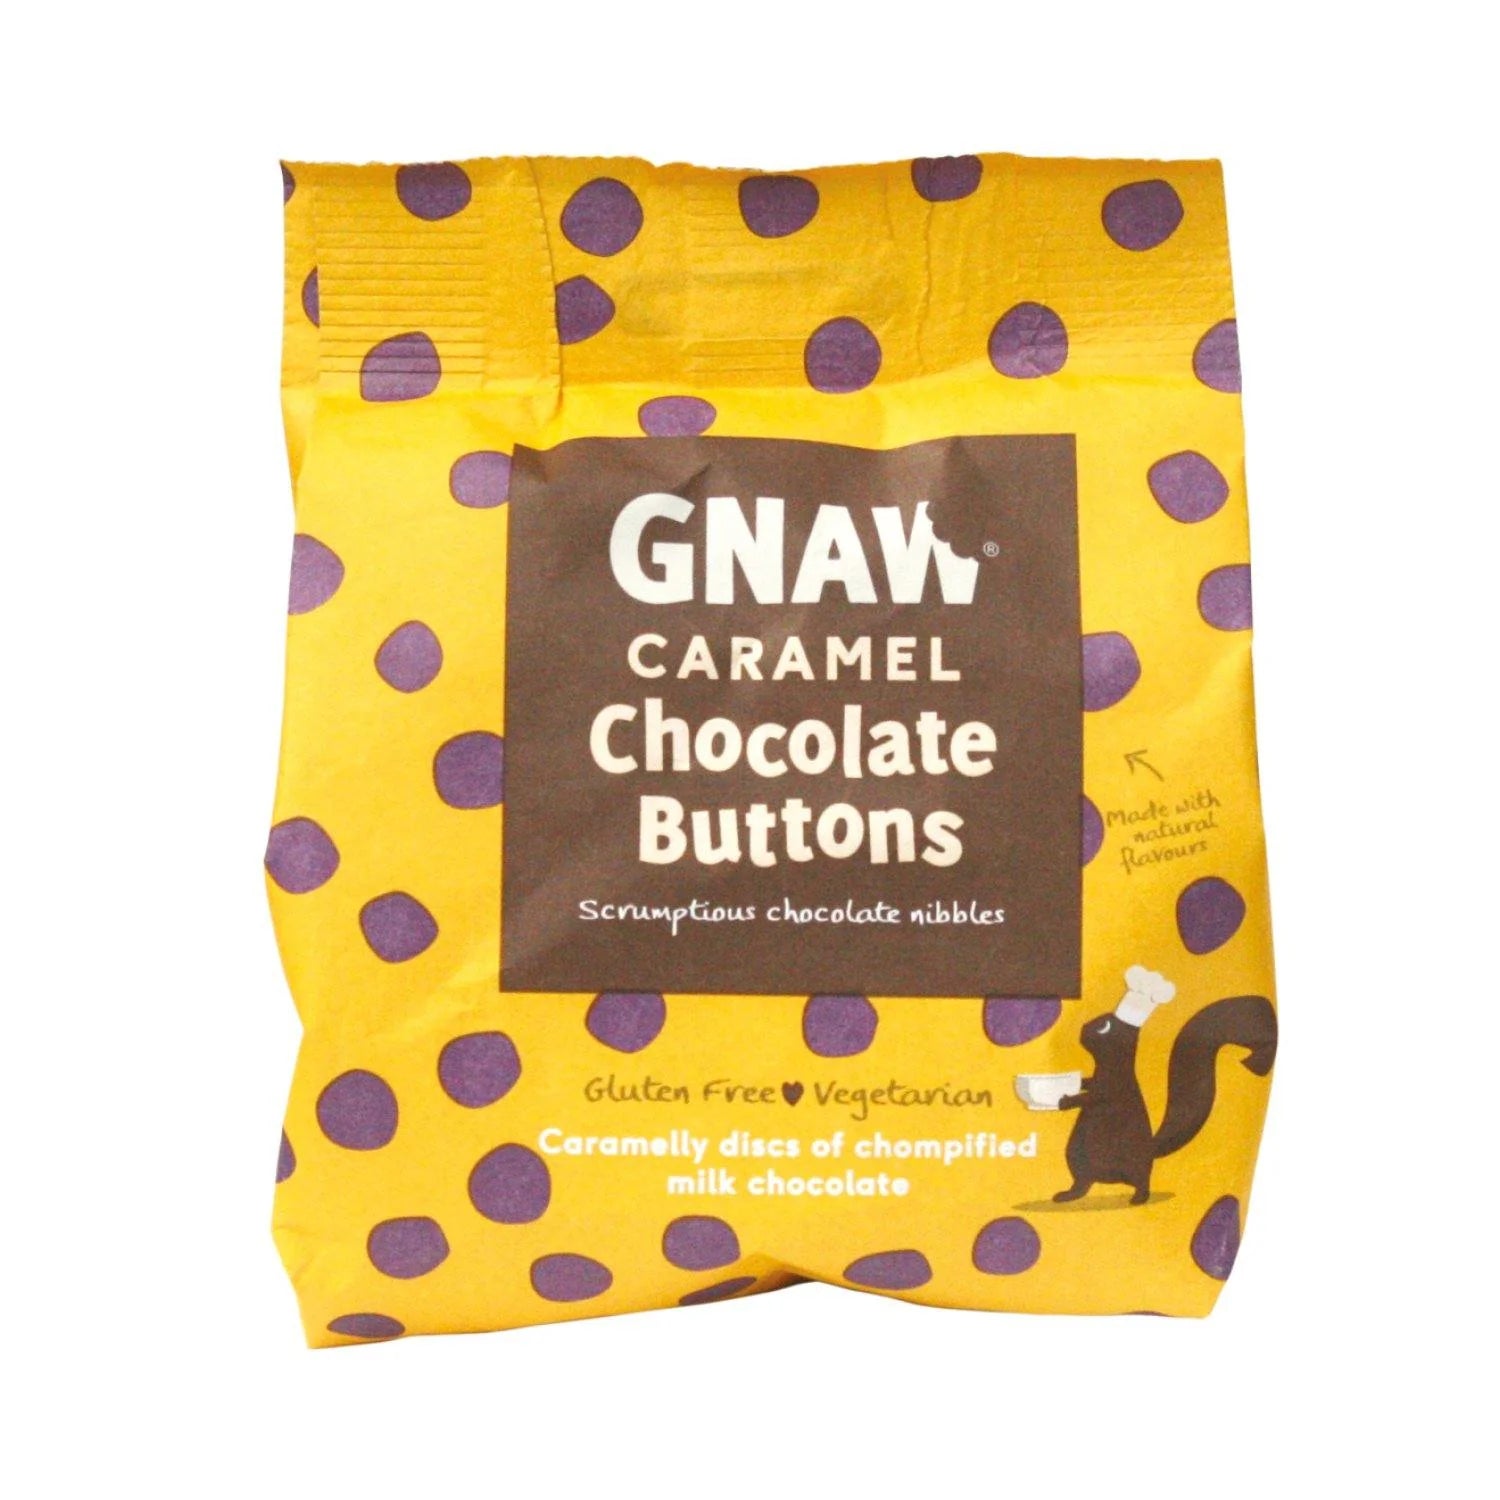 Gnaw Caramel Chocolate Buttons - 150g